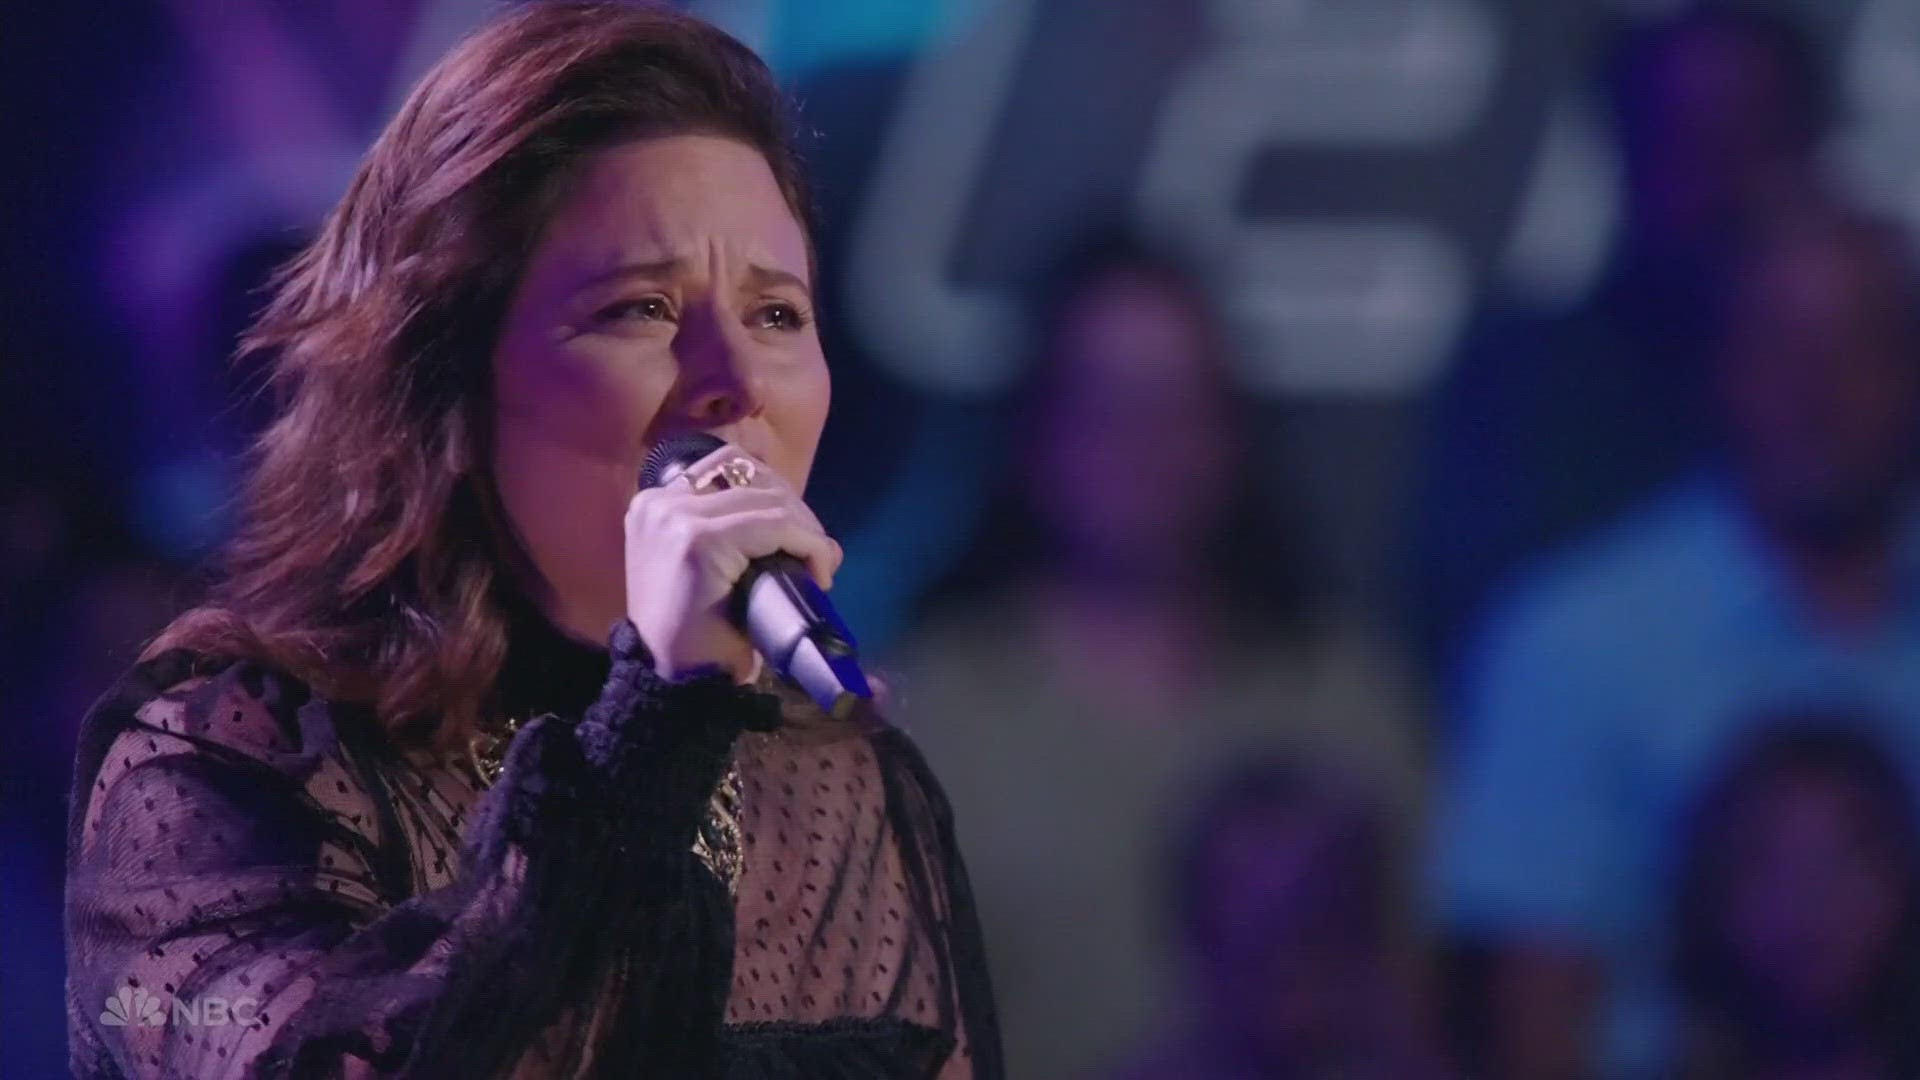 Musician Alexa Wildish talks about her experience so far on season 24 of The Voice on NBC.